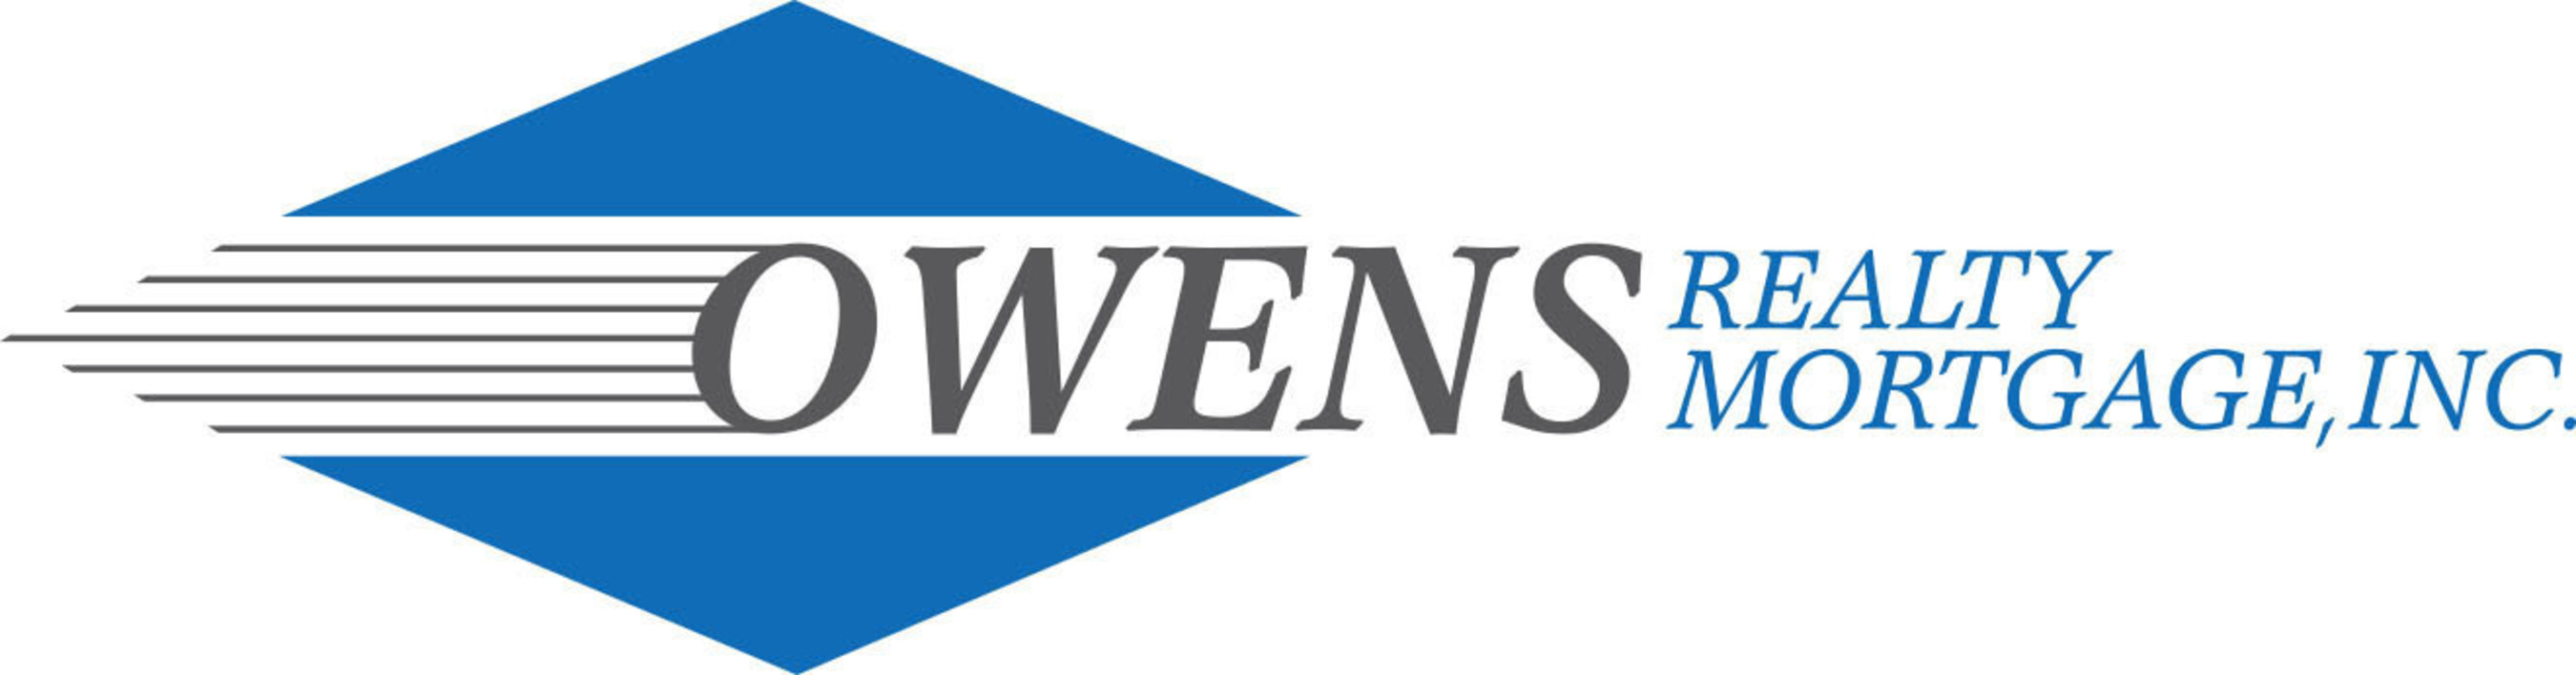 Owens Realty Mortgage, Inc. logo.